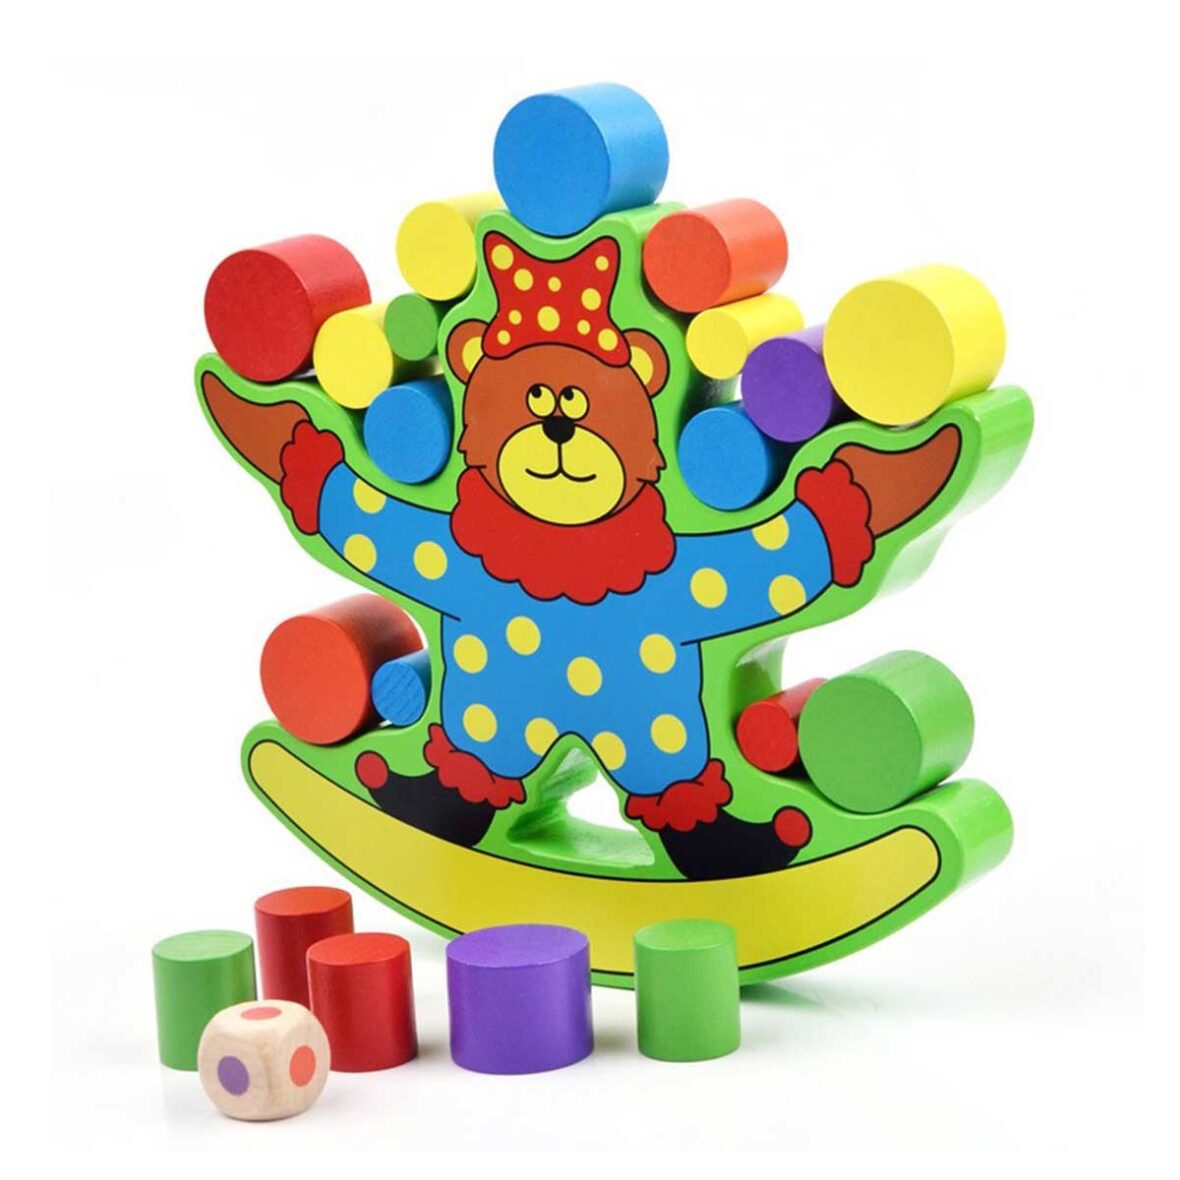 Little Bear Balance Toy | Educational Gift for Kids